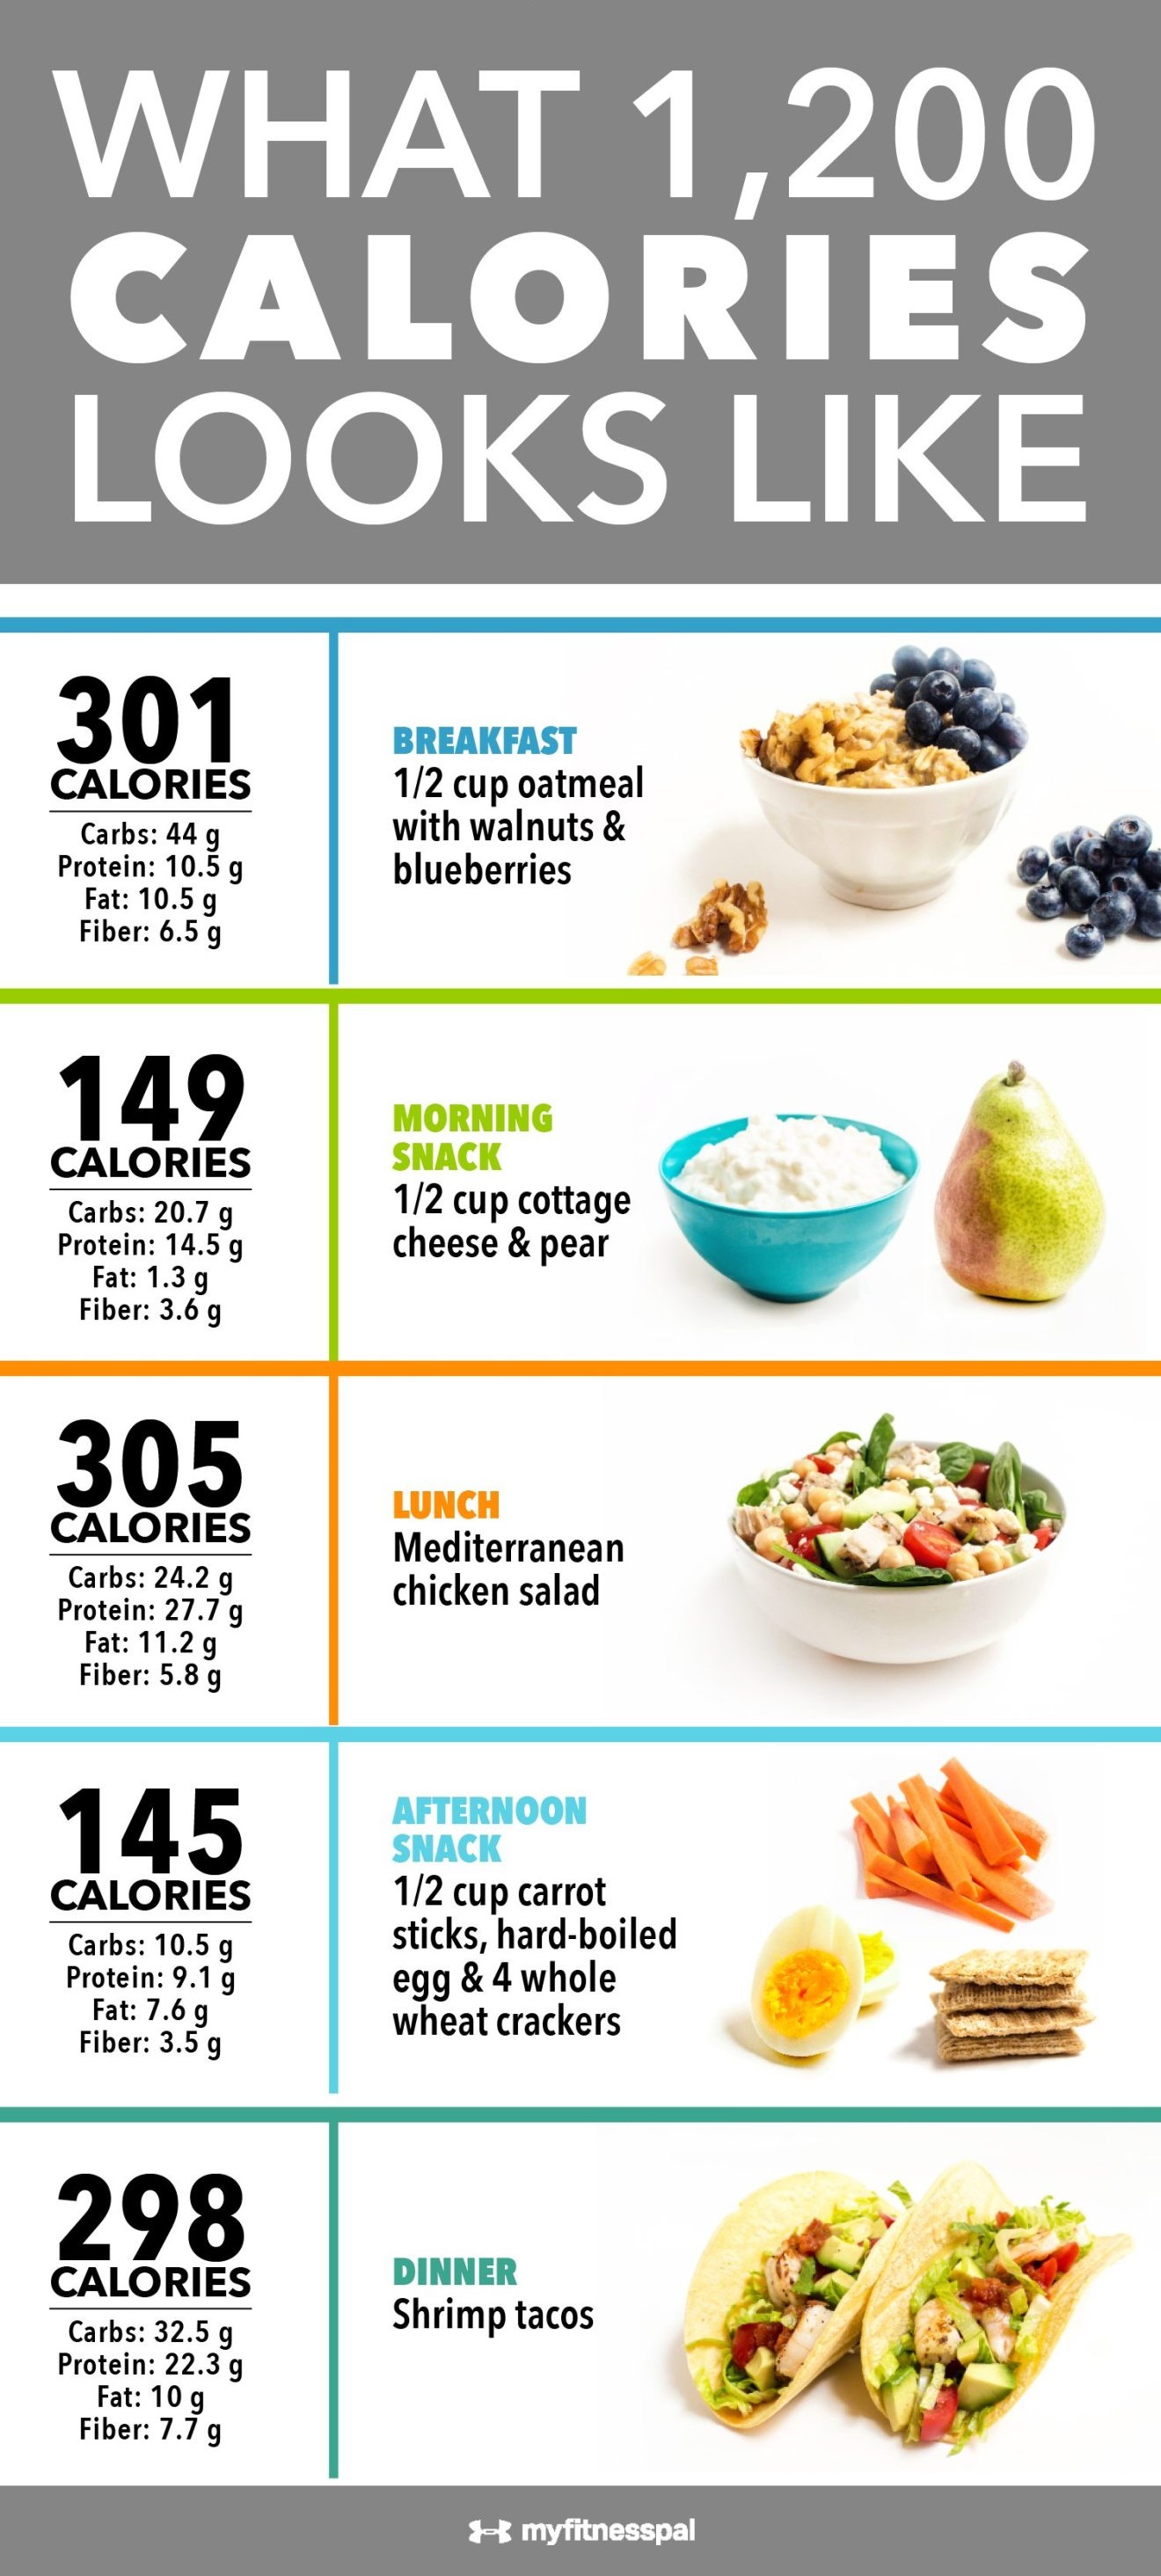 1200 Calories Diet Plan